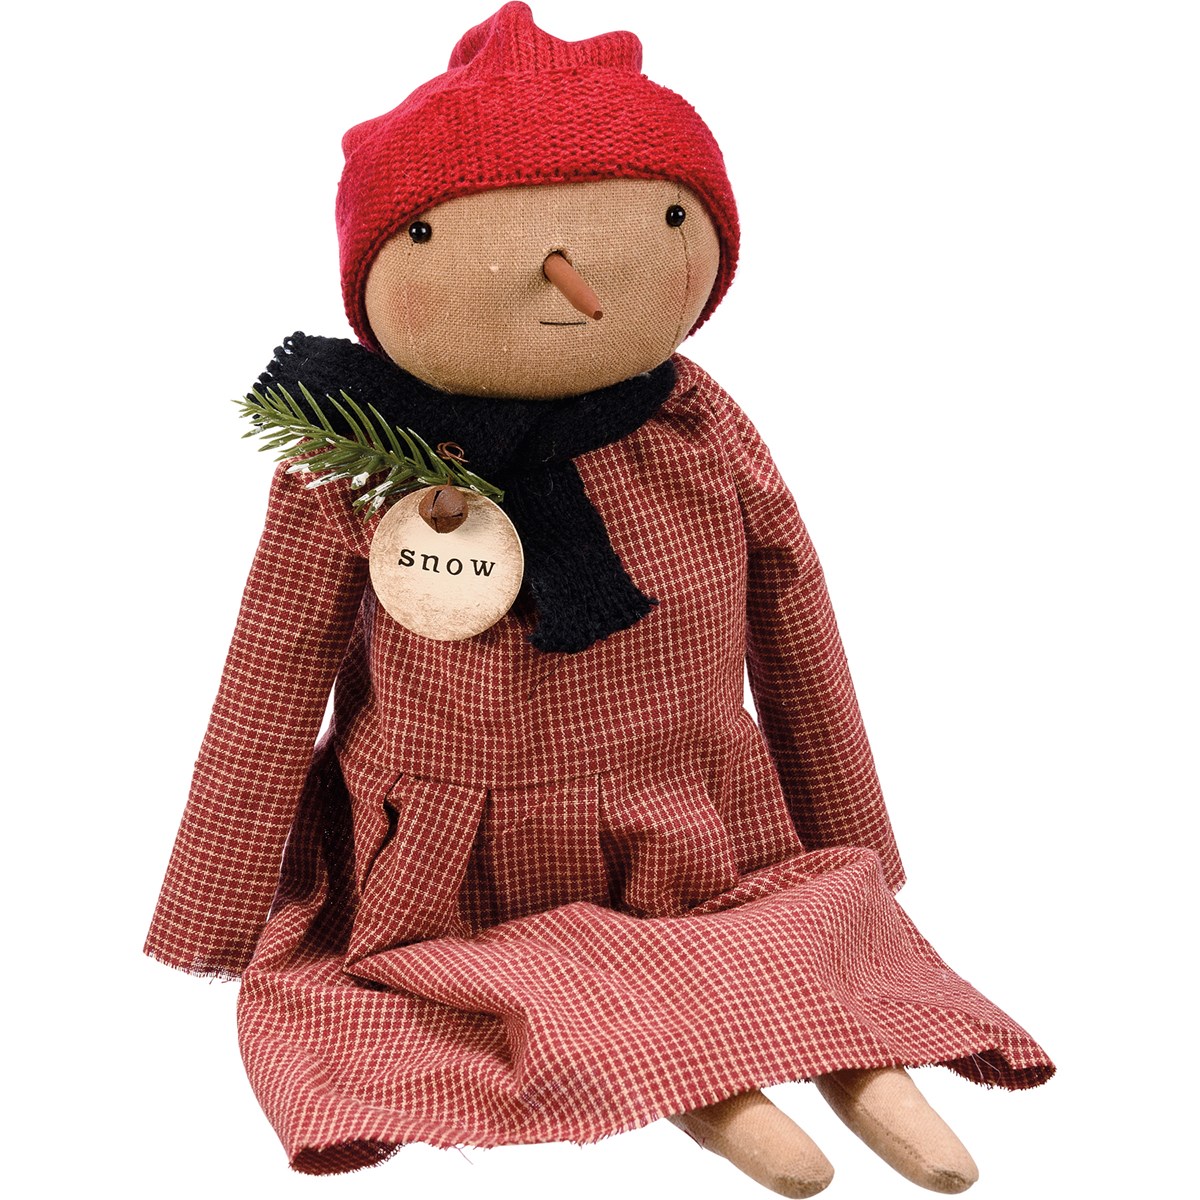 Sierra Snowgirl Doll - Cotton, Wood, Wire, Plastic, Metal